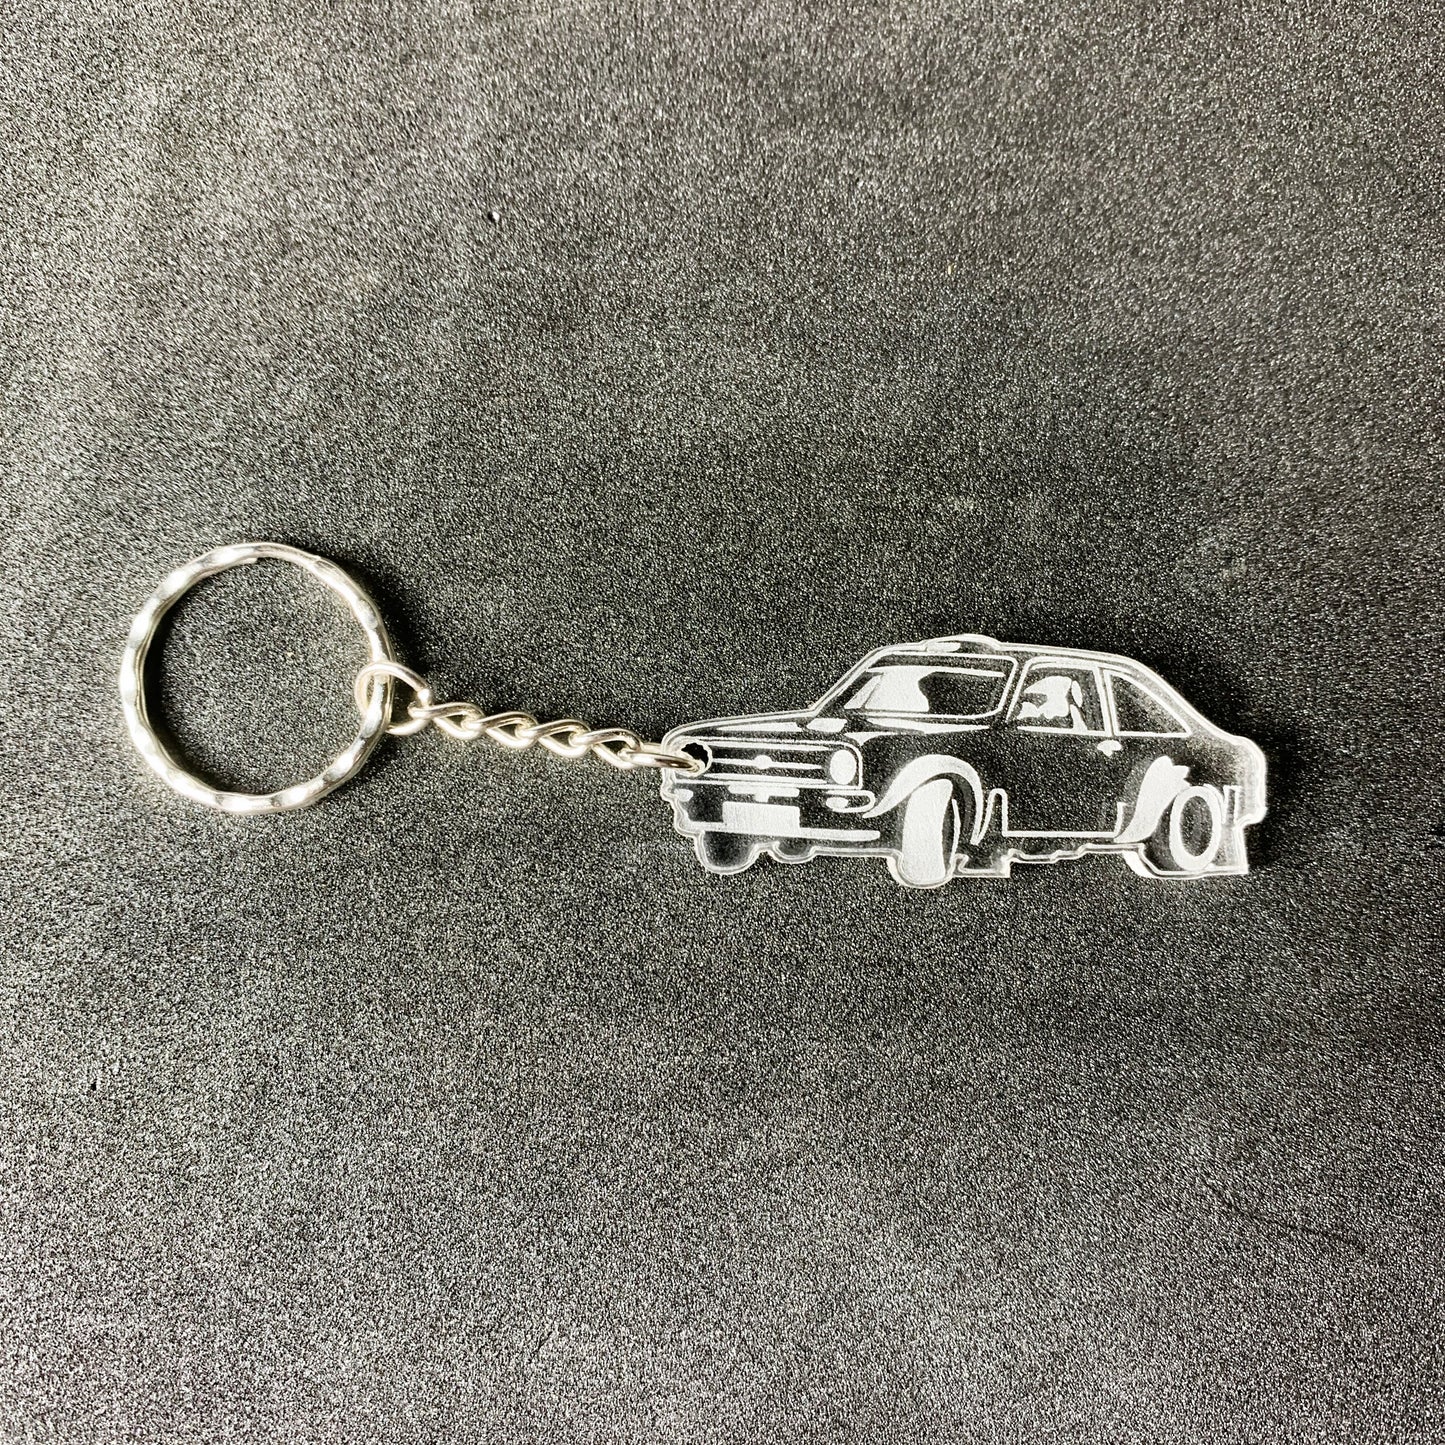 Ford Escort MK1 Key Ring Key Chain